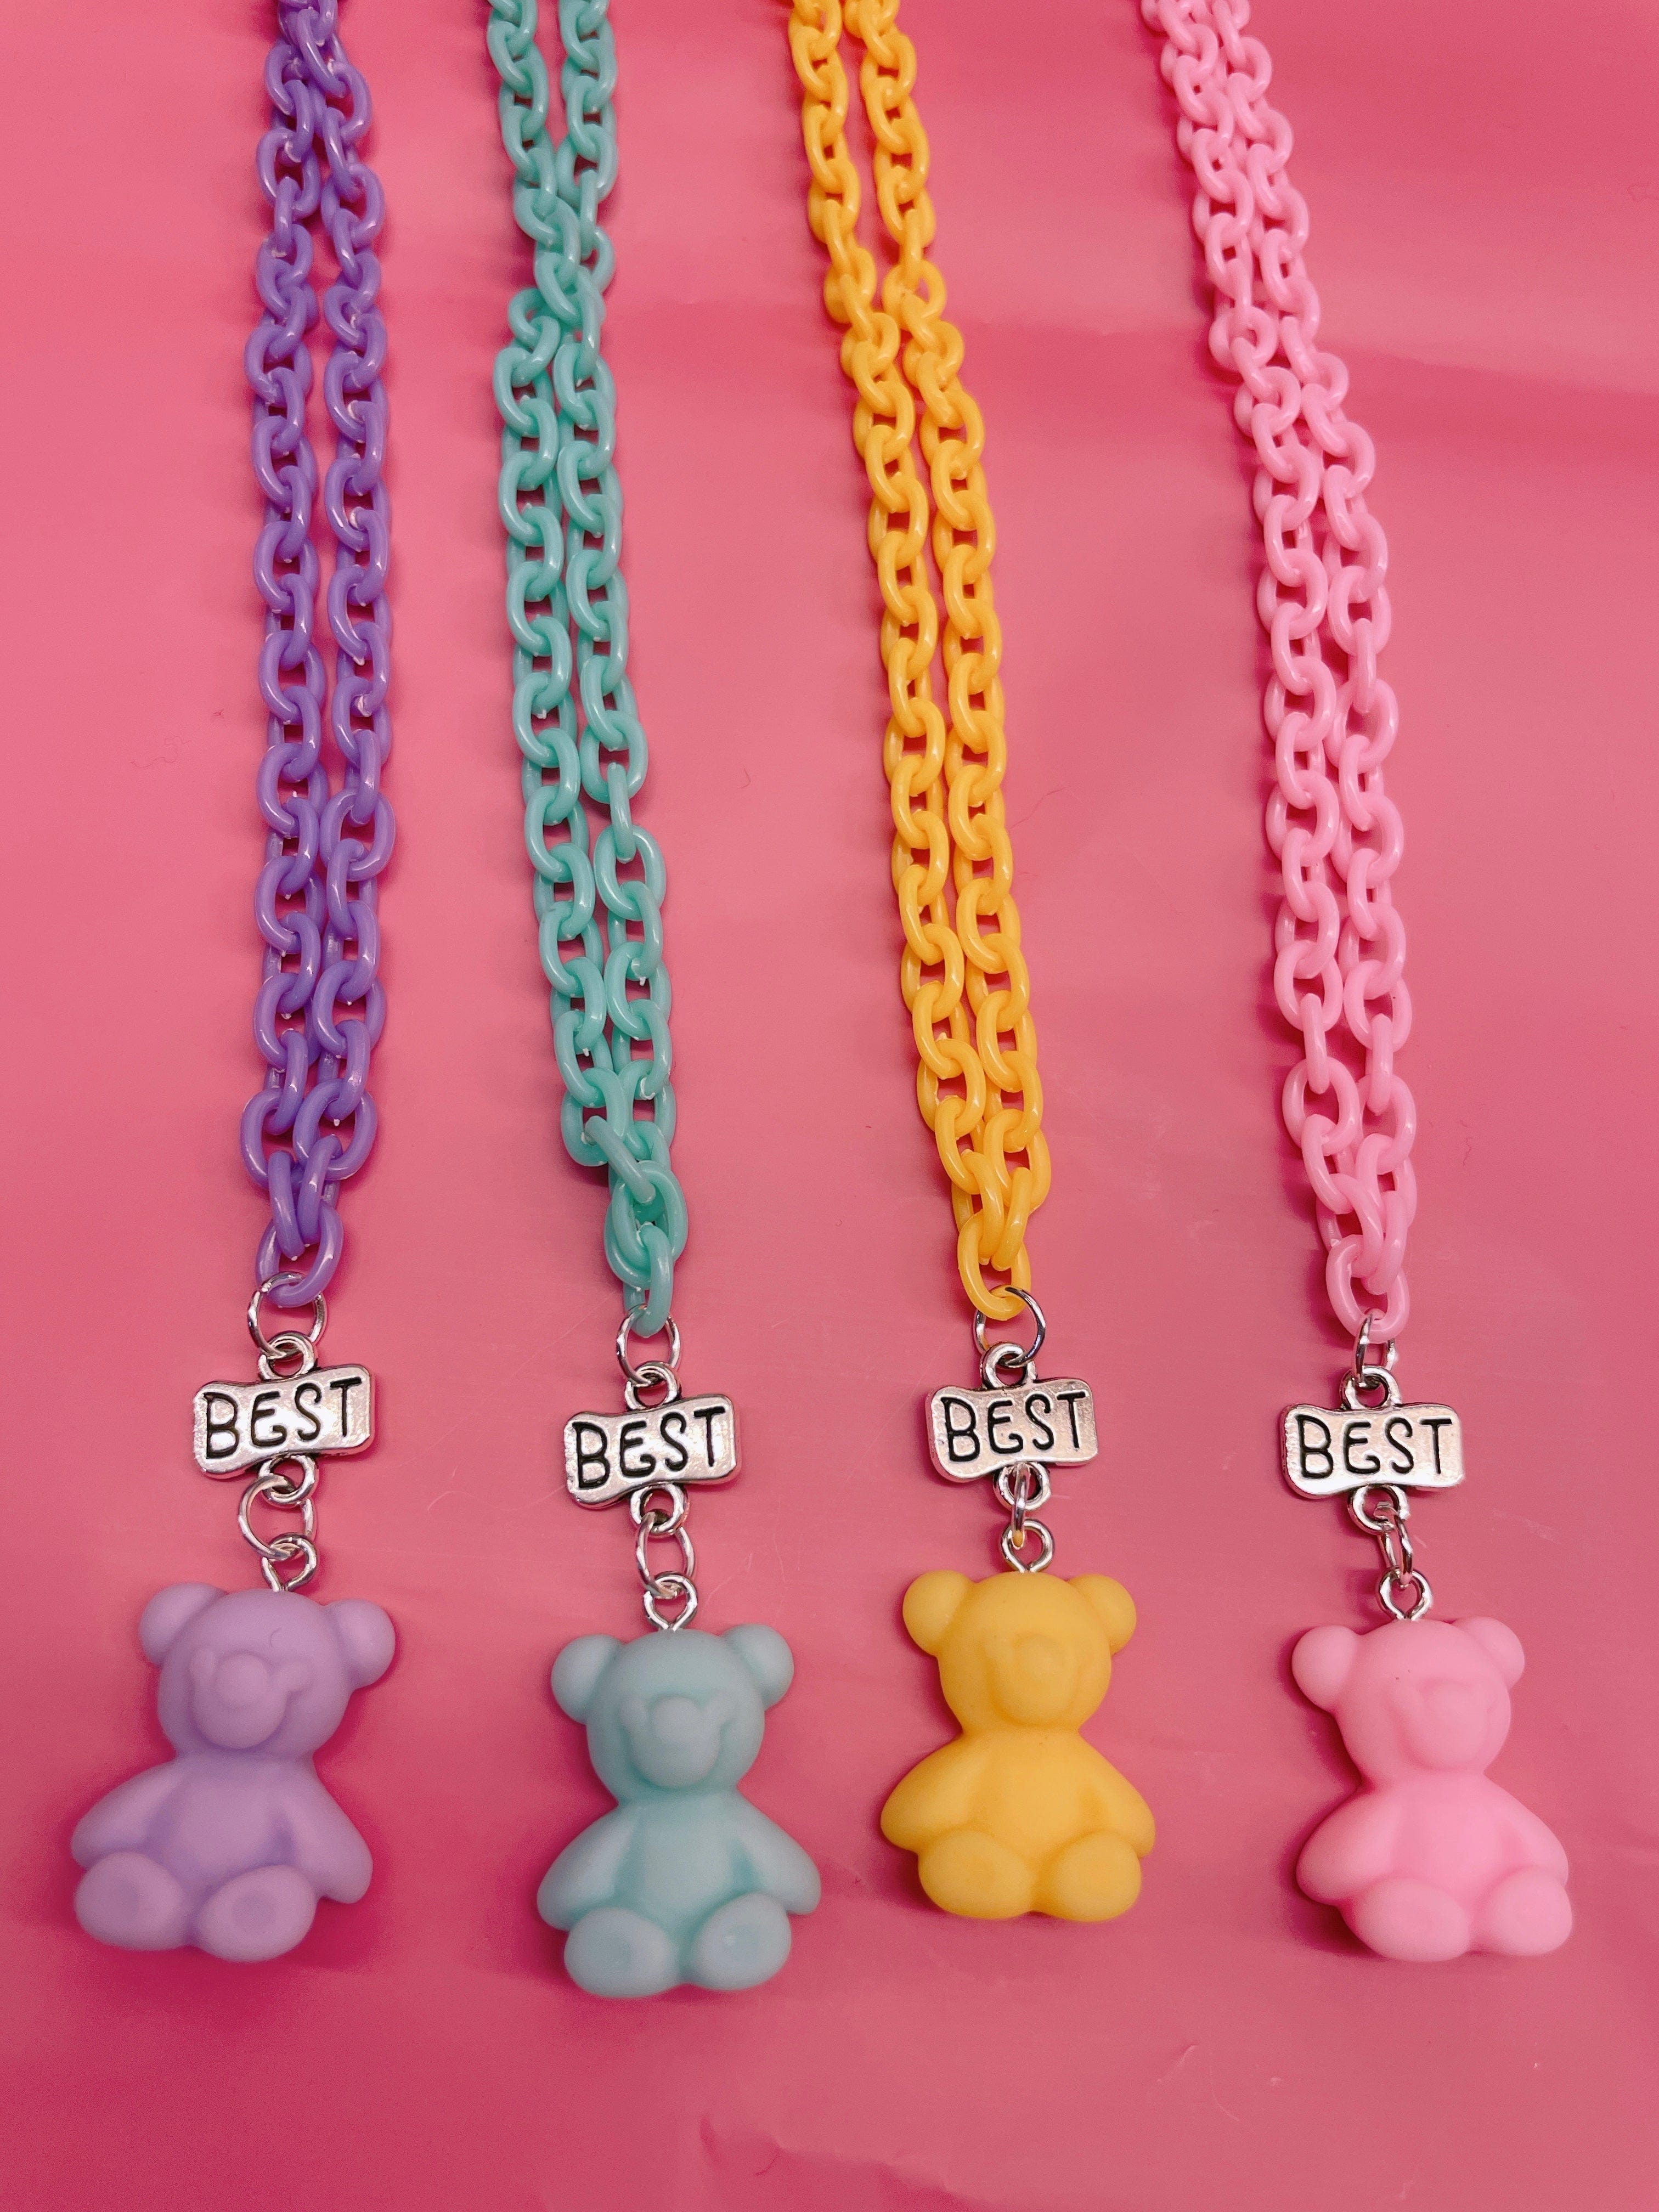 Taobao Best Bear Necklace Kawaii Gifts